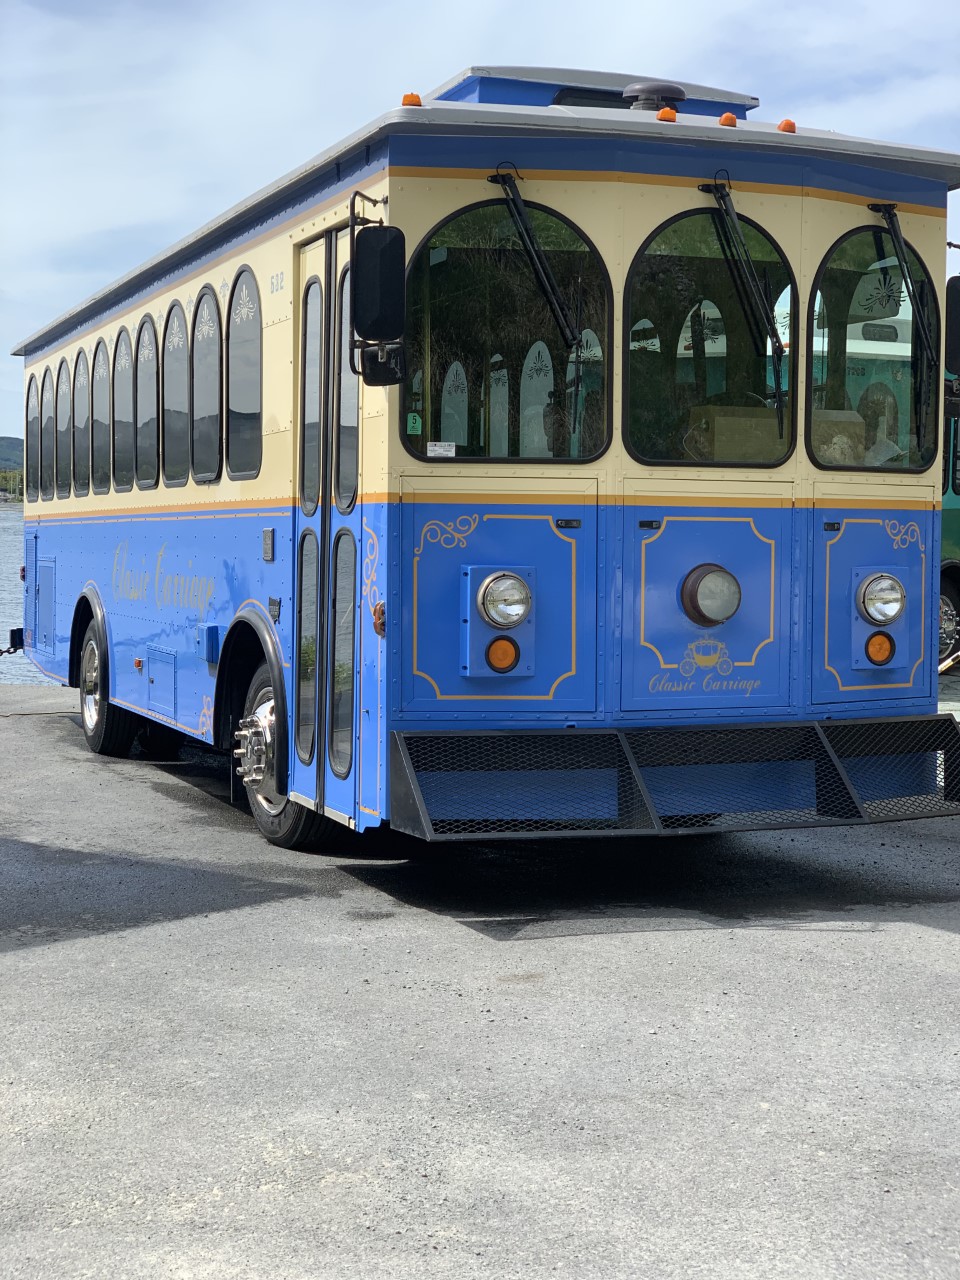 SanFrancisco Trolley, St. John's luxury bus tour, Best Newfoundland transportation